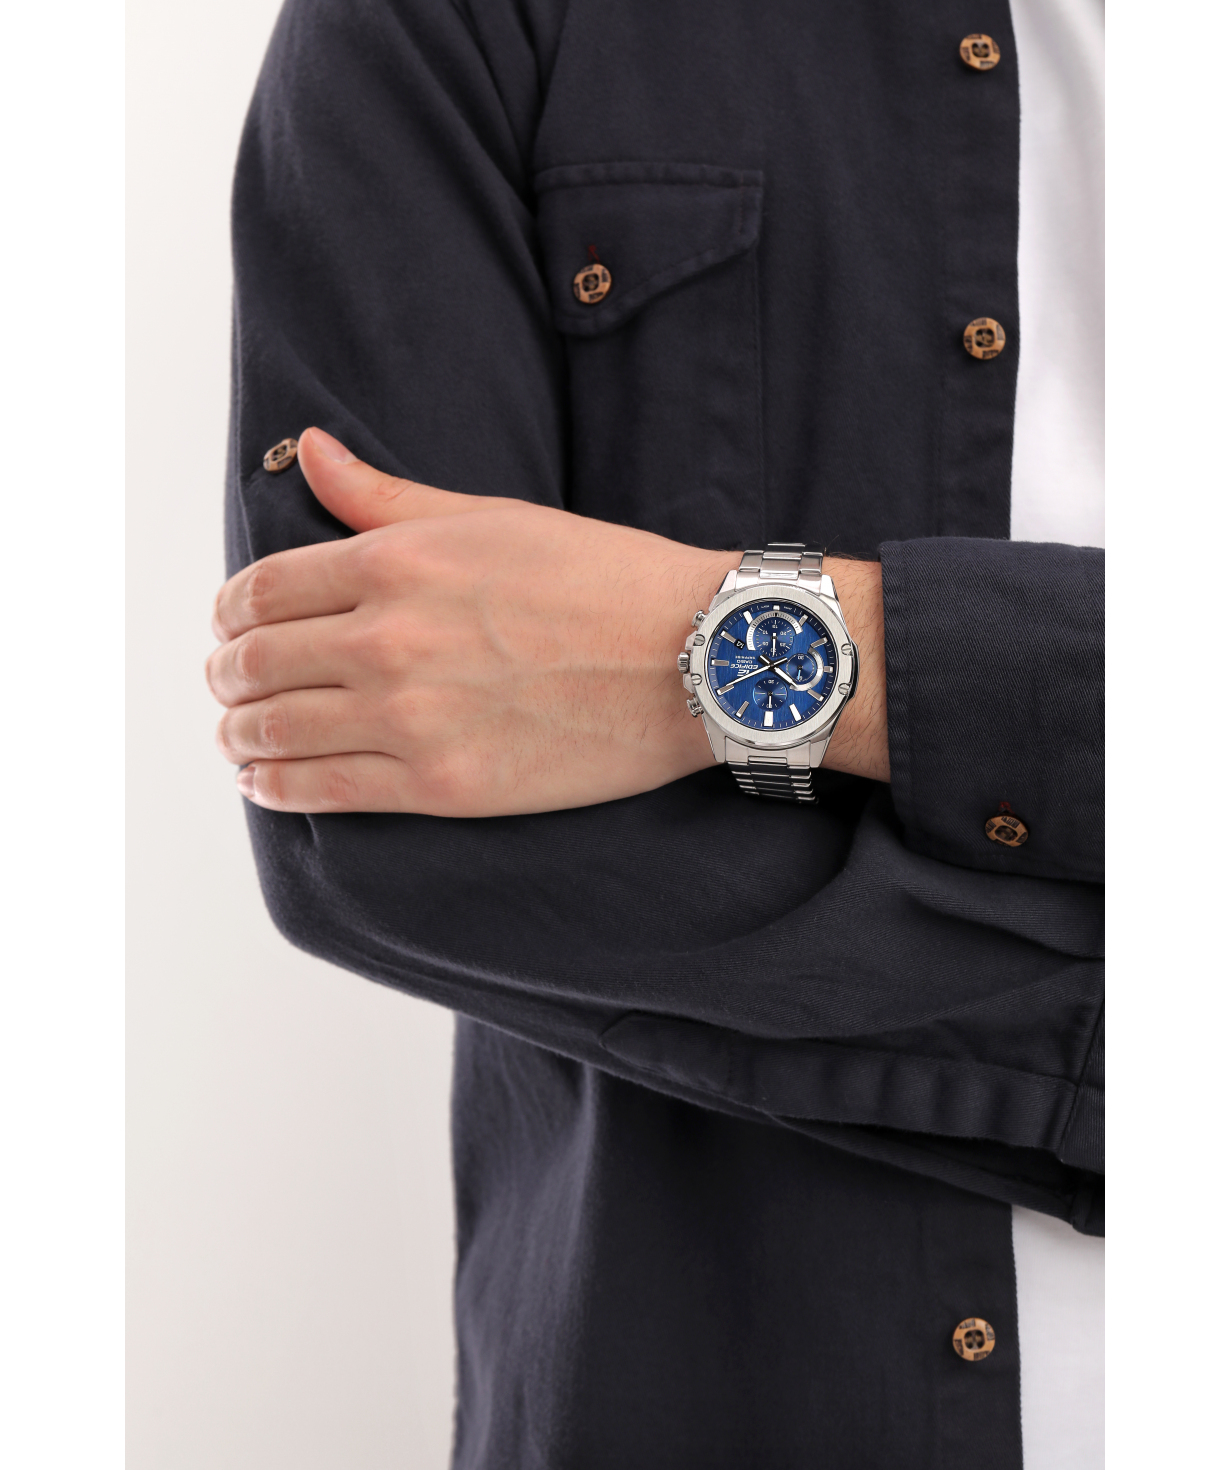 Ժամացույց  «Casio» ձեռքի  EFR-S567D-2AVUDF